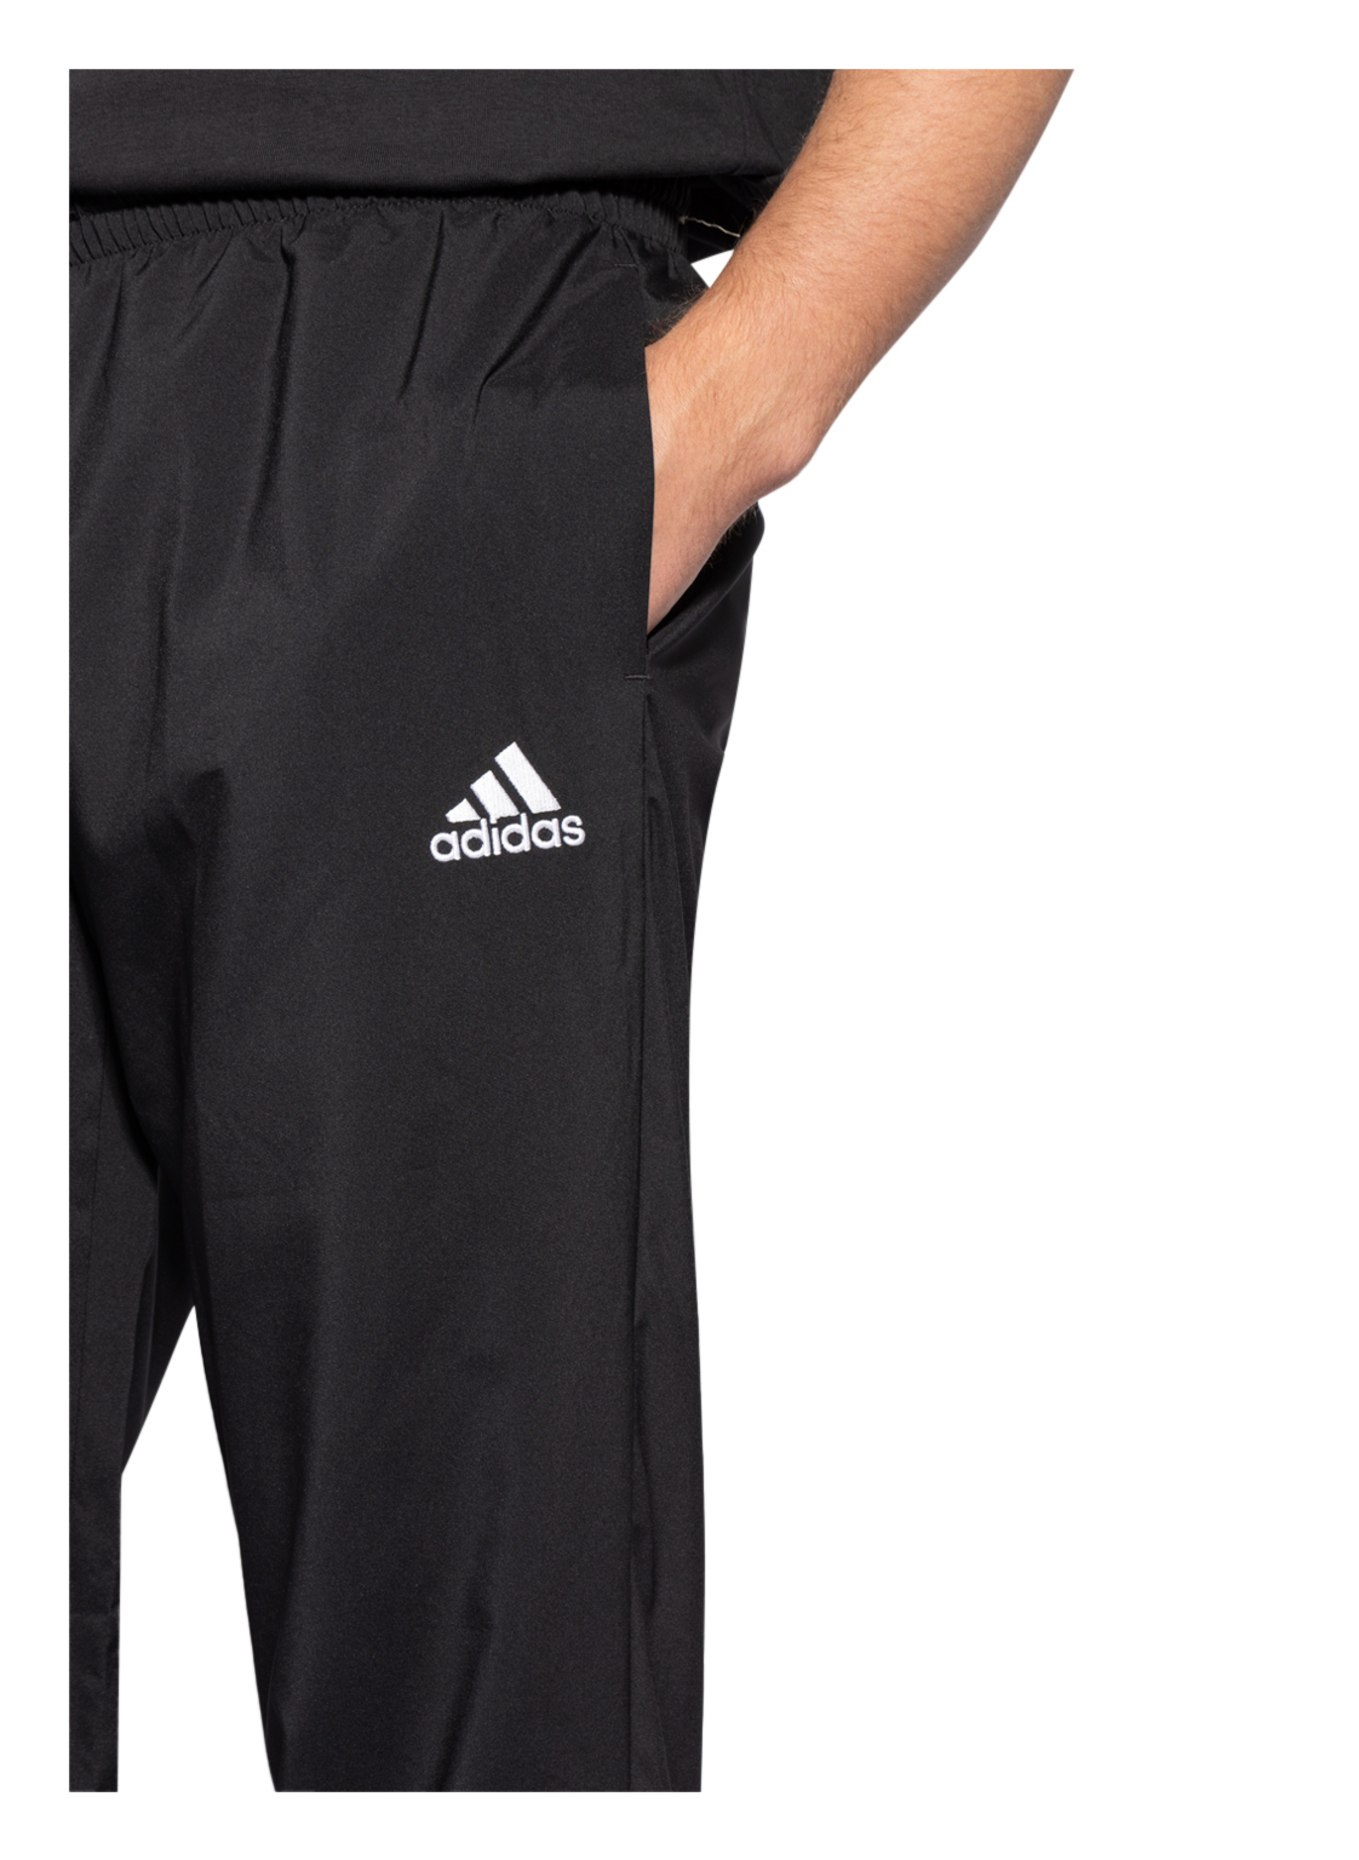 Men's Adidas Essentials Warm-Up Track Pants Open Hem 3-Stripes  Black/White Sz M | eBay